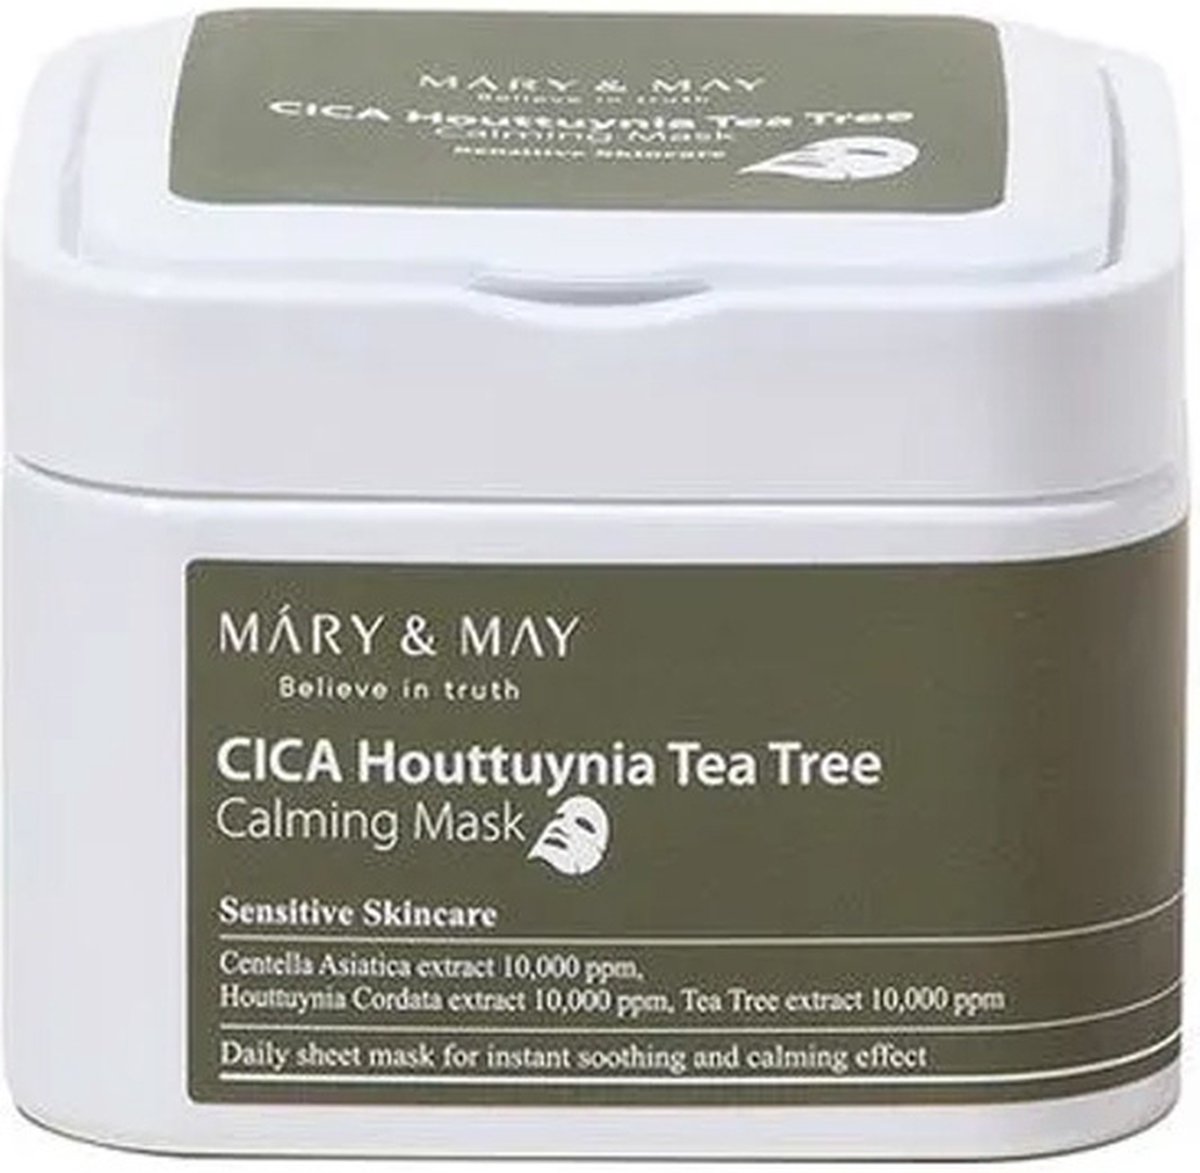 Mary & May - CICA Houttuynia Tea Tree Calming Mask 30 pcs [Korean Skincare]